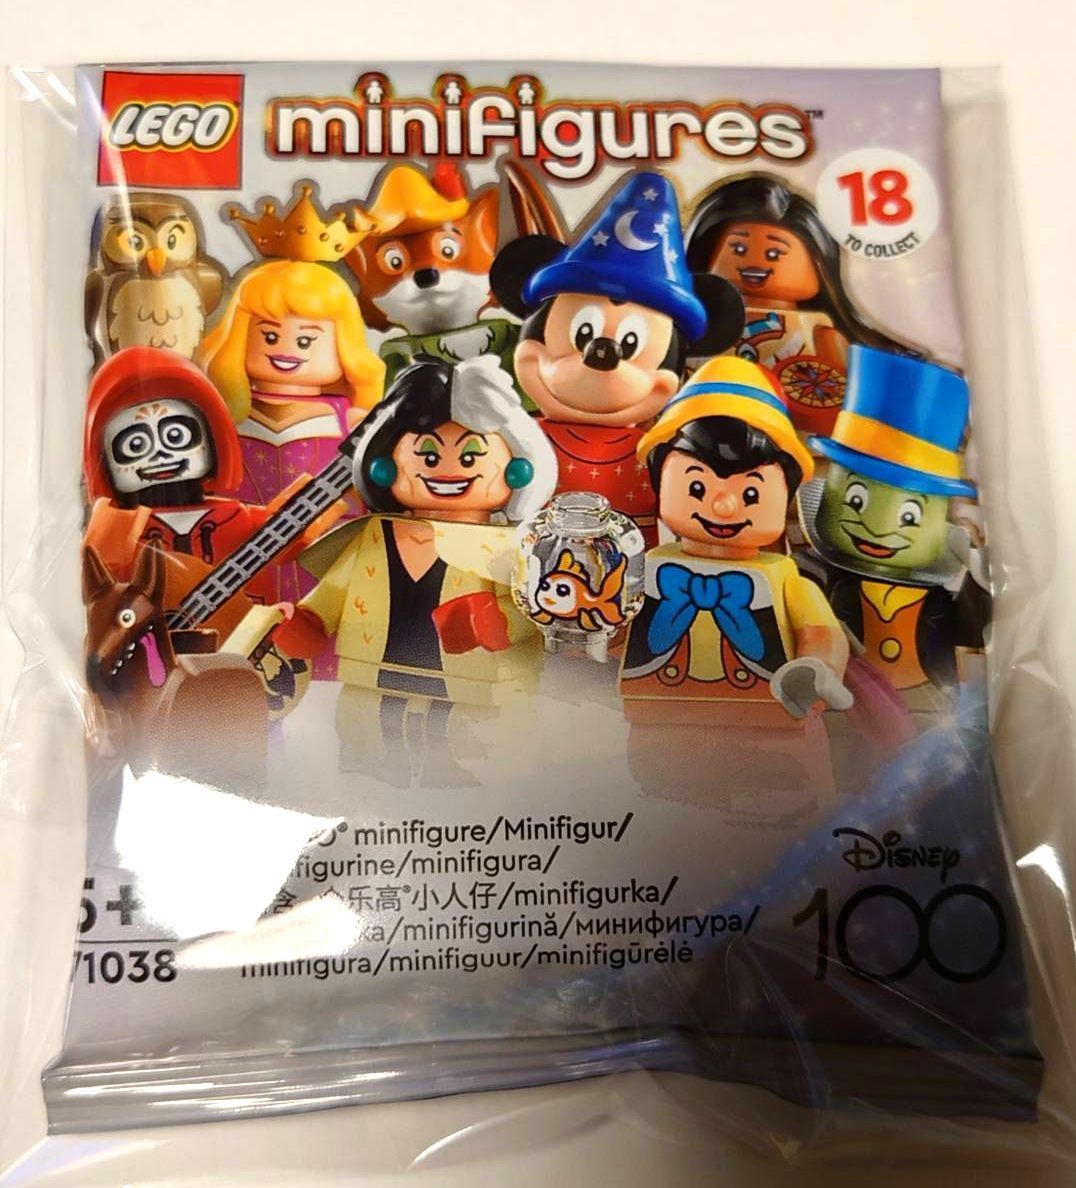  Prince * John Disney mini figure Mini fig Lego 100 71039